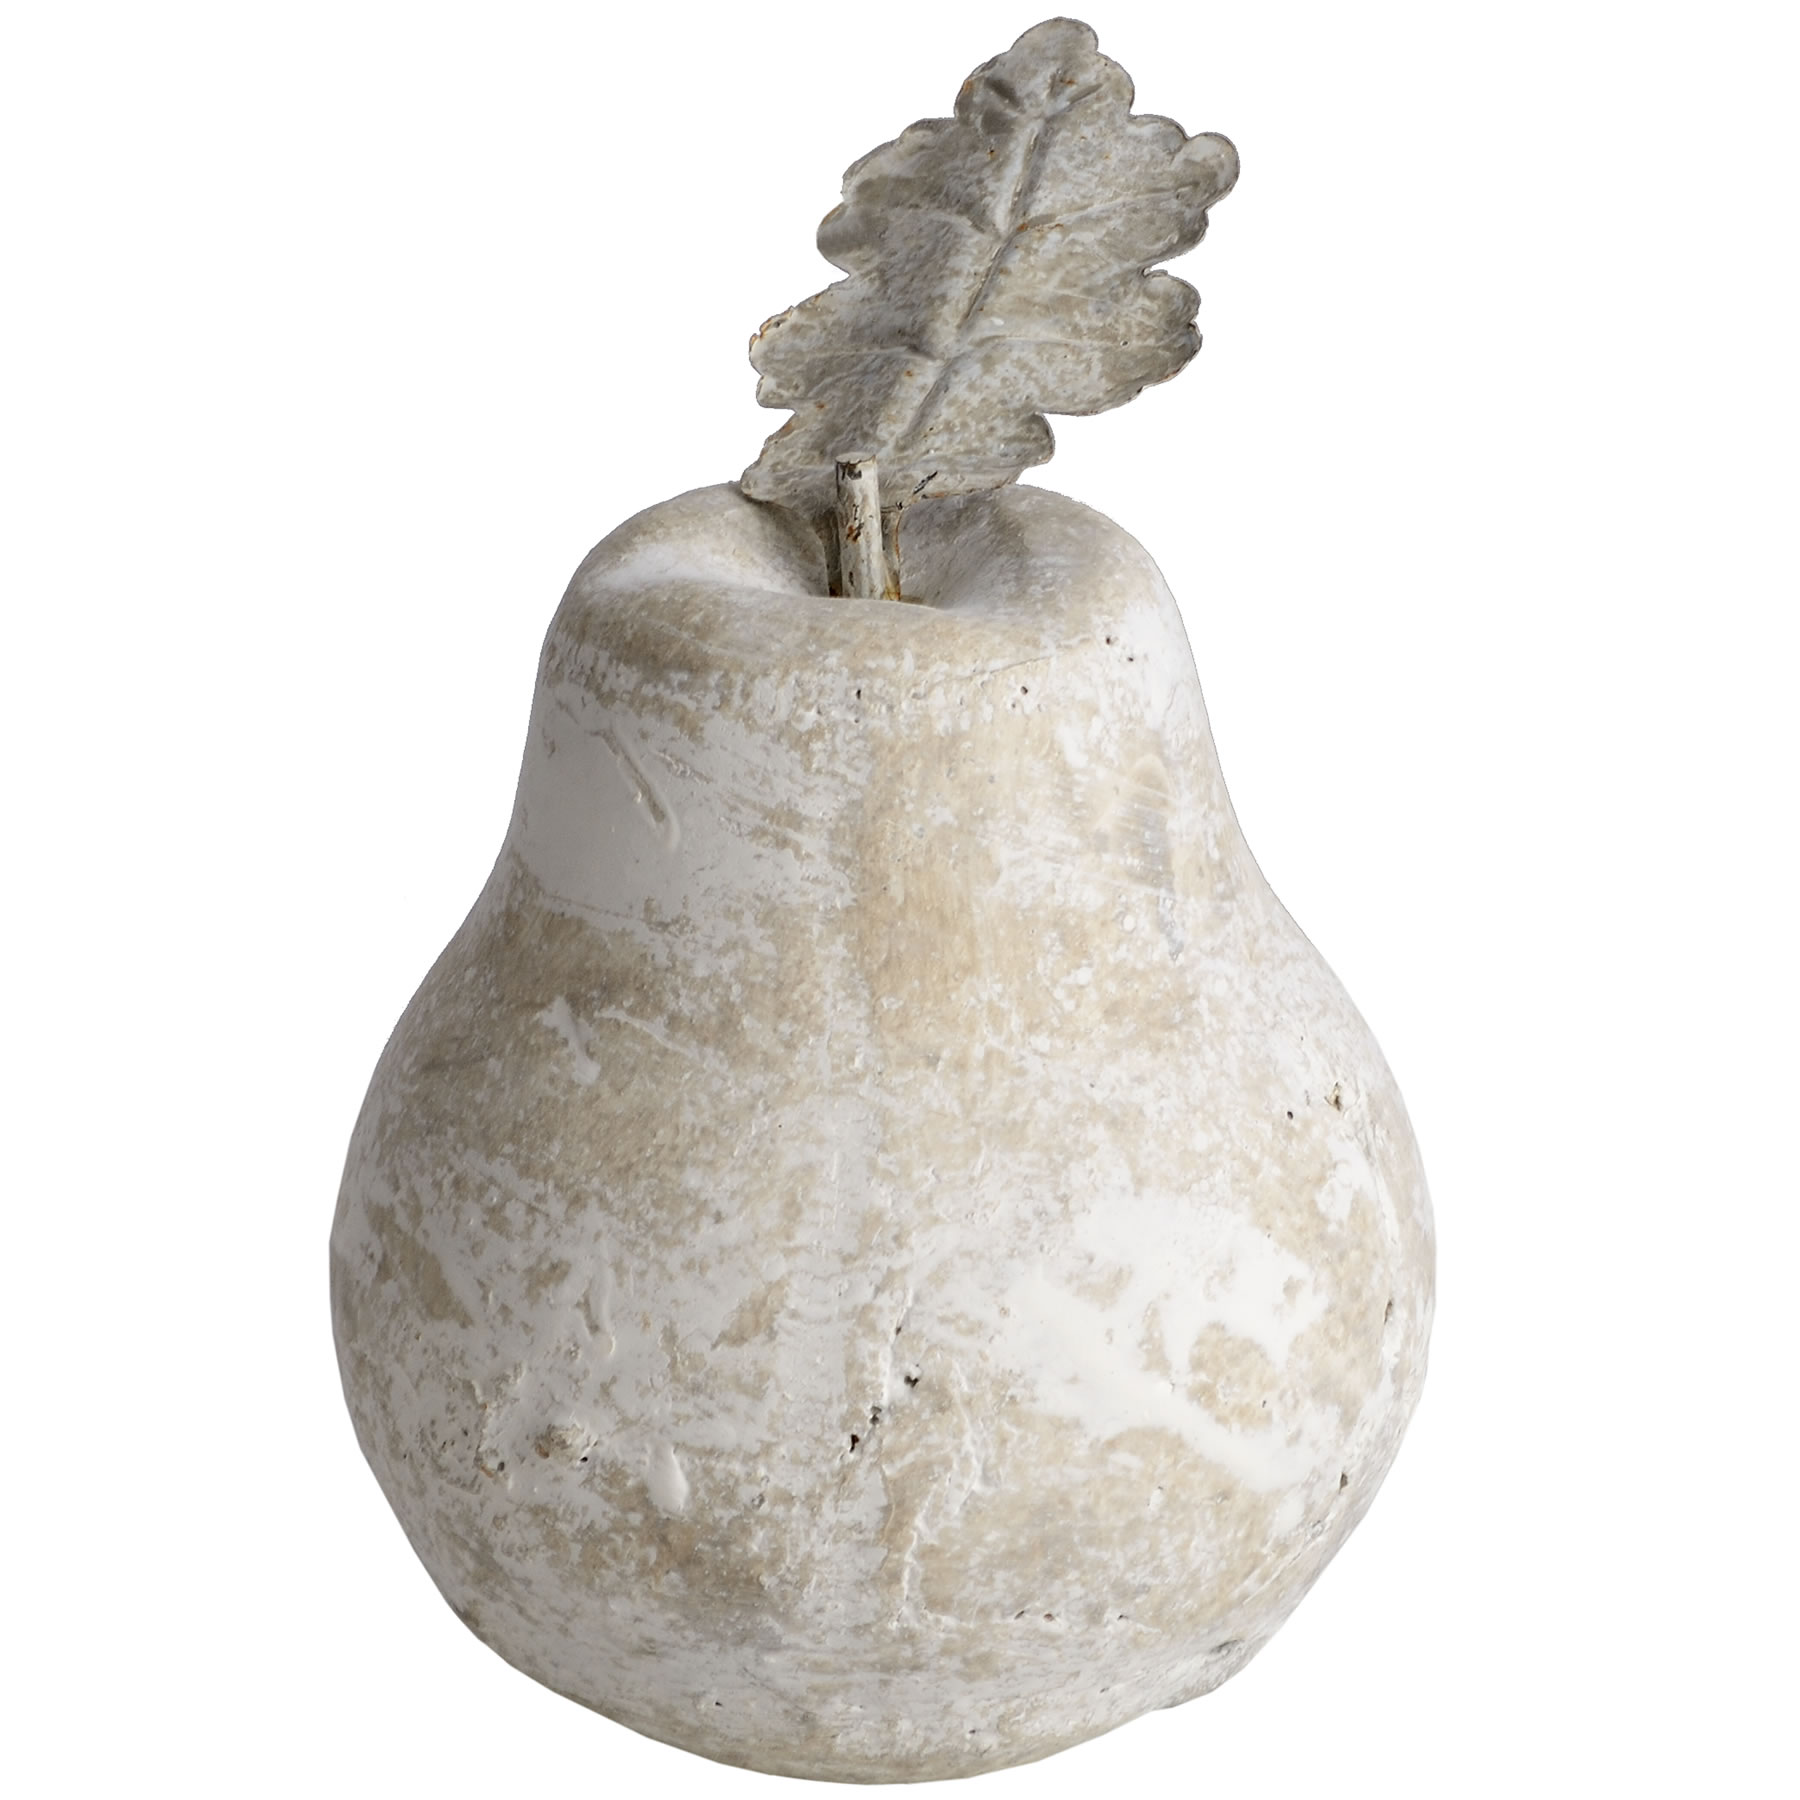 Stone Pear (Small) - Image 1